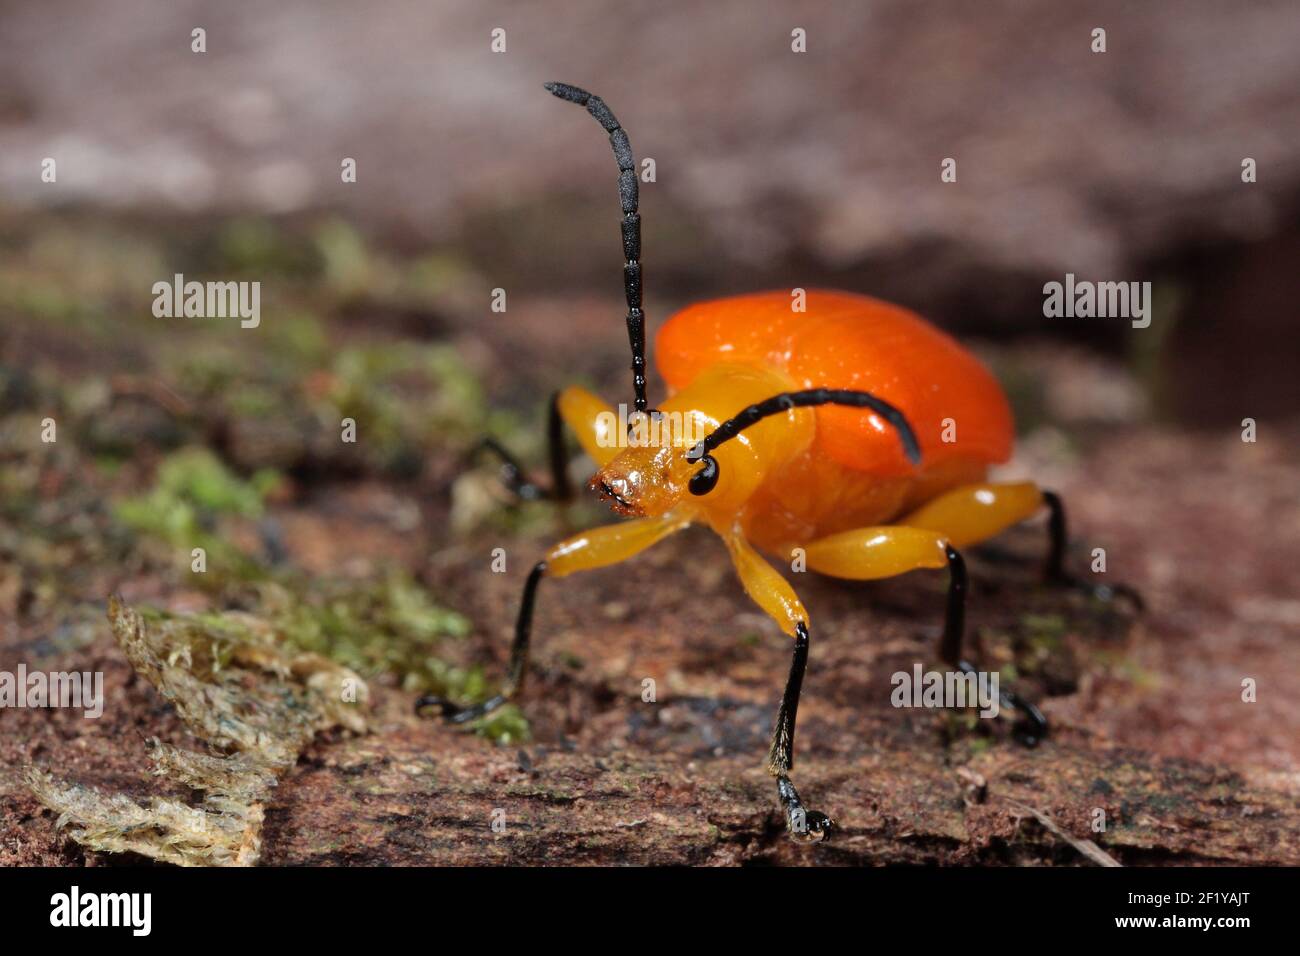 Orange Beetle (Chrysomelidae), Montagne d'Ambre (Amber Mountain), Madagascar Stock Photo